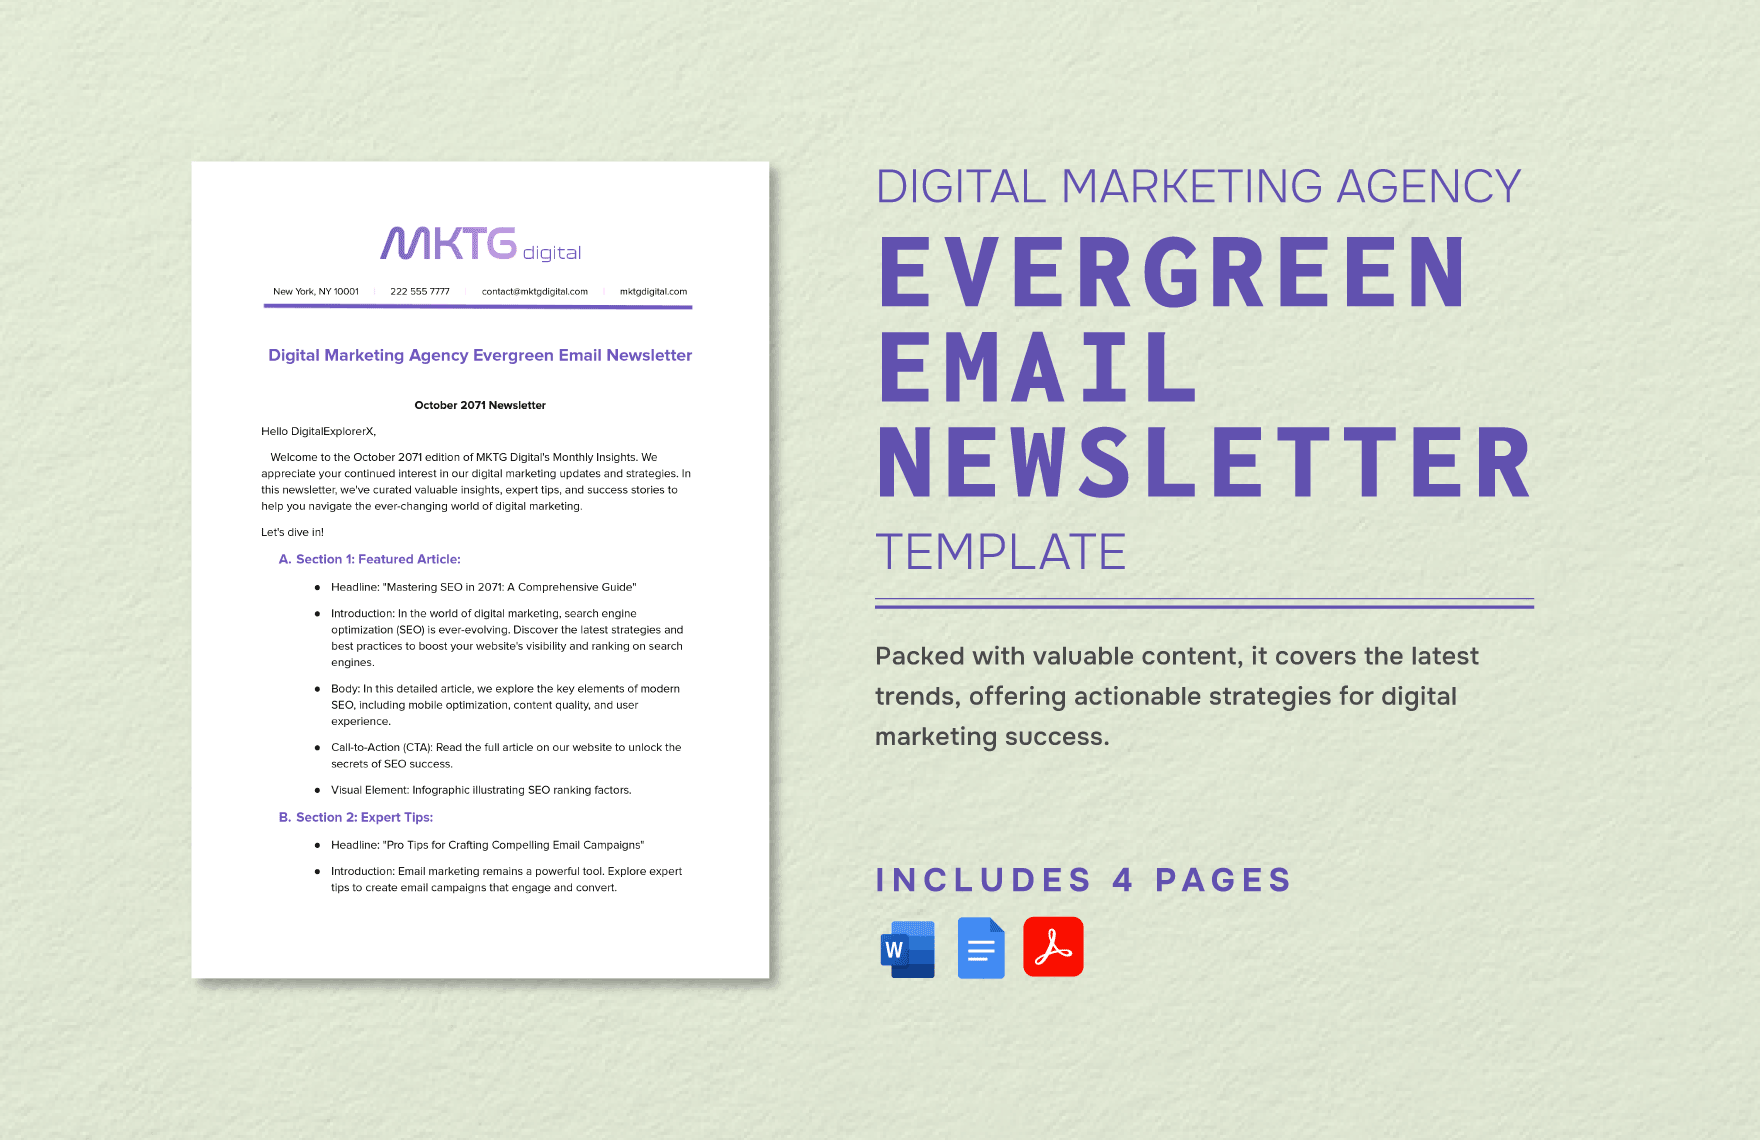 Digital Marketing Agency Evergreen Email Newsletter Template